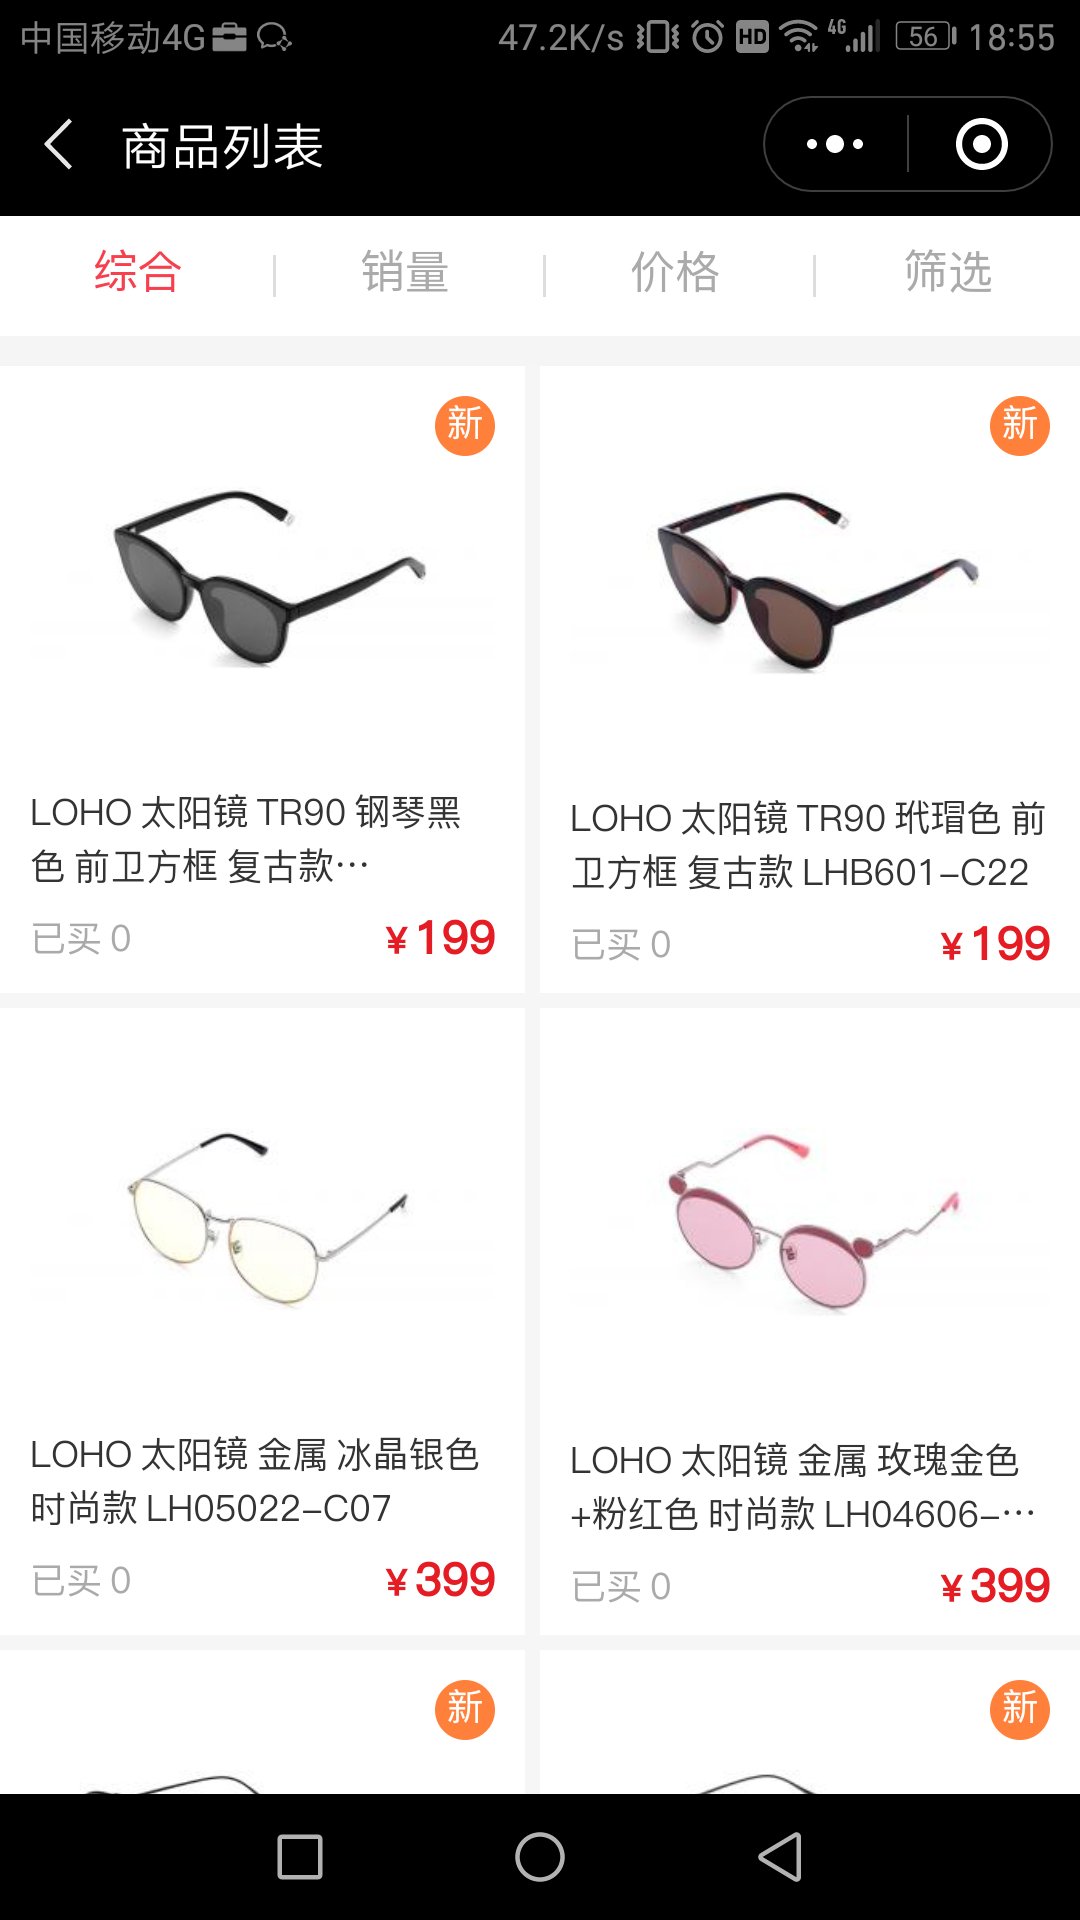 LOHO眼镜生活旗舰店